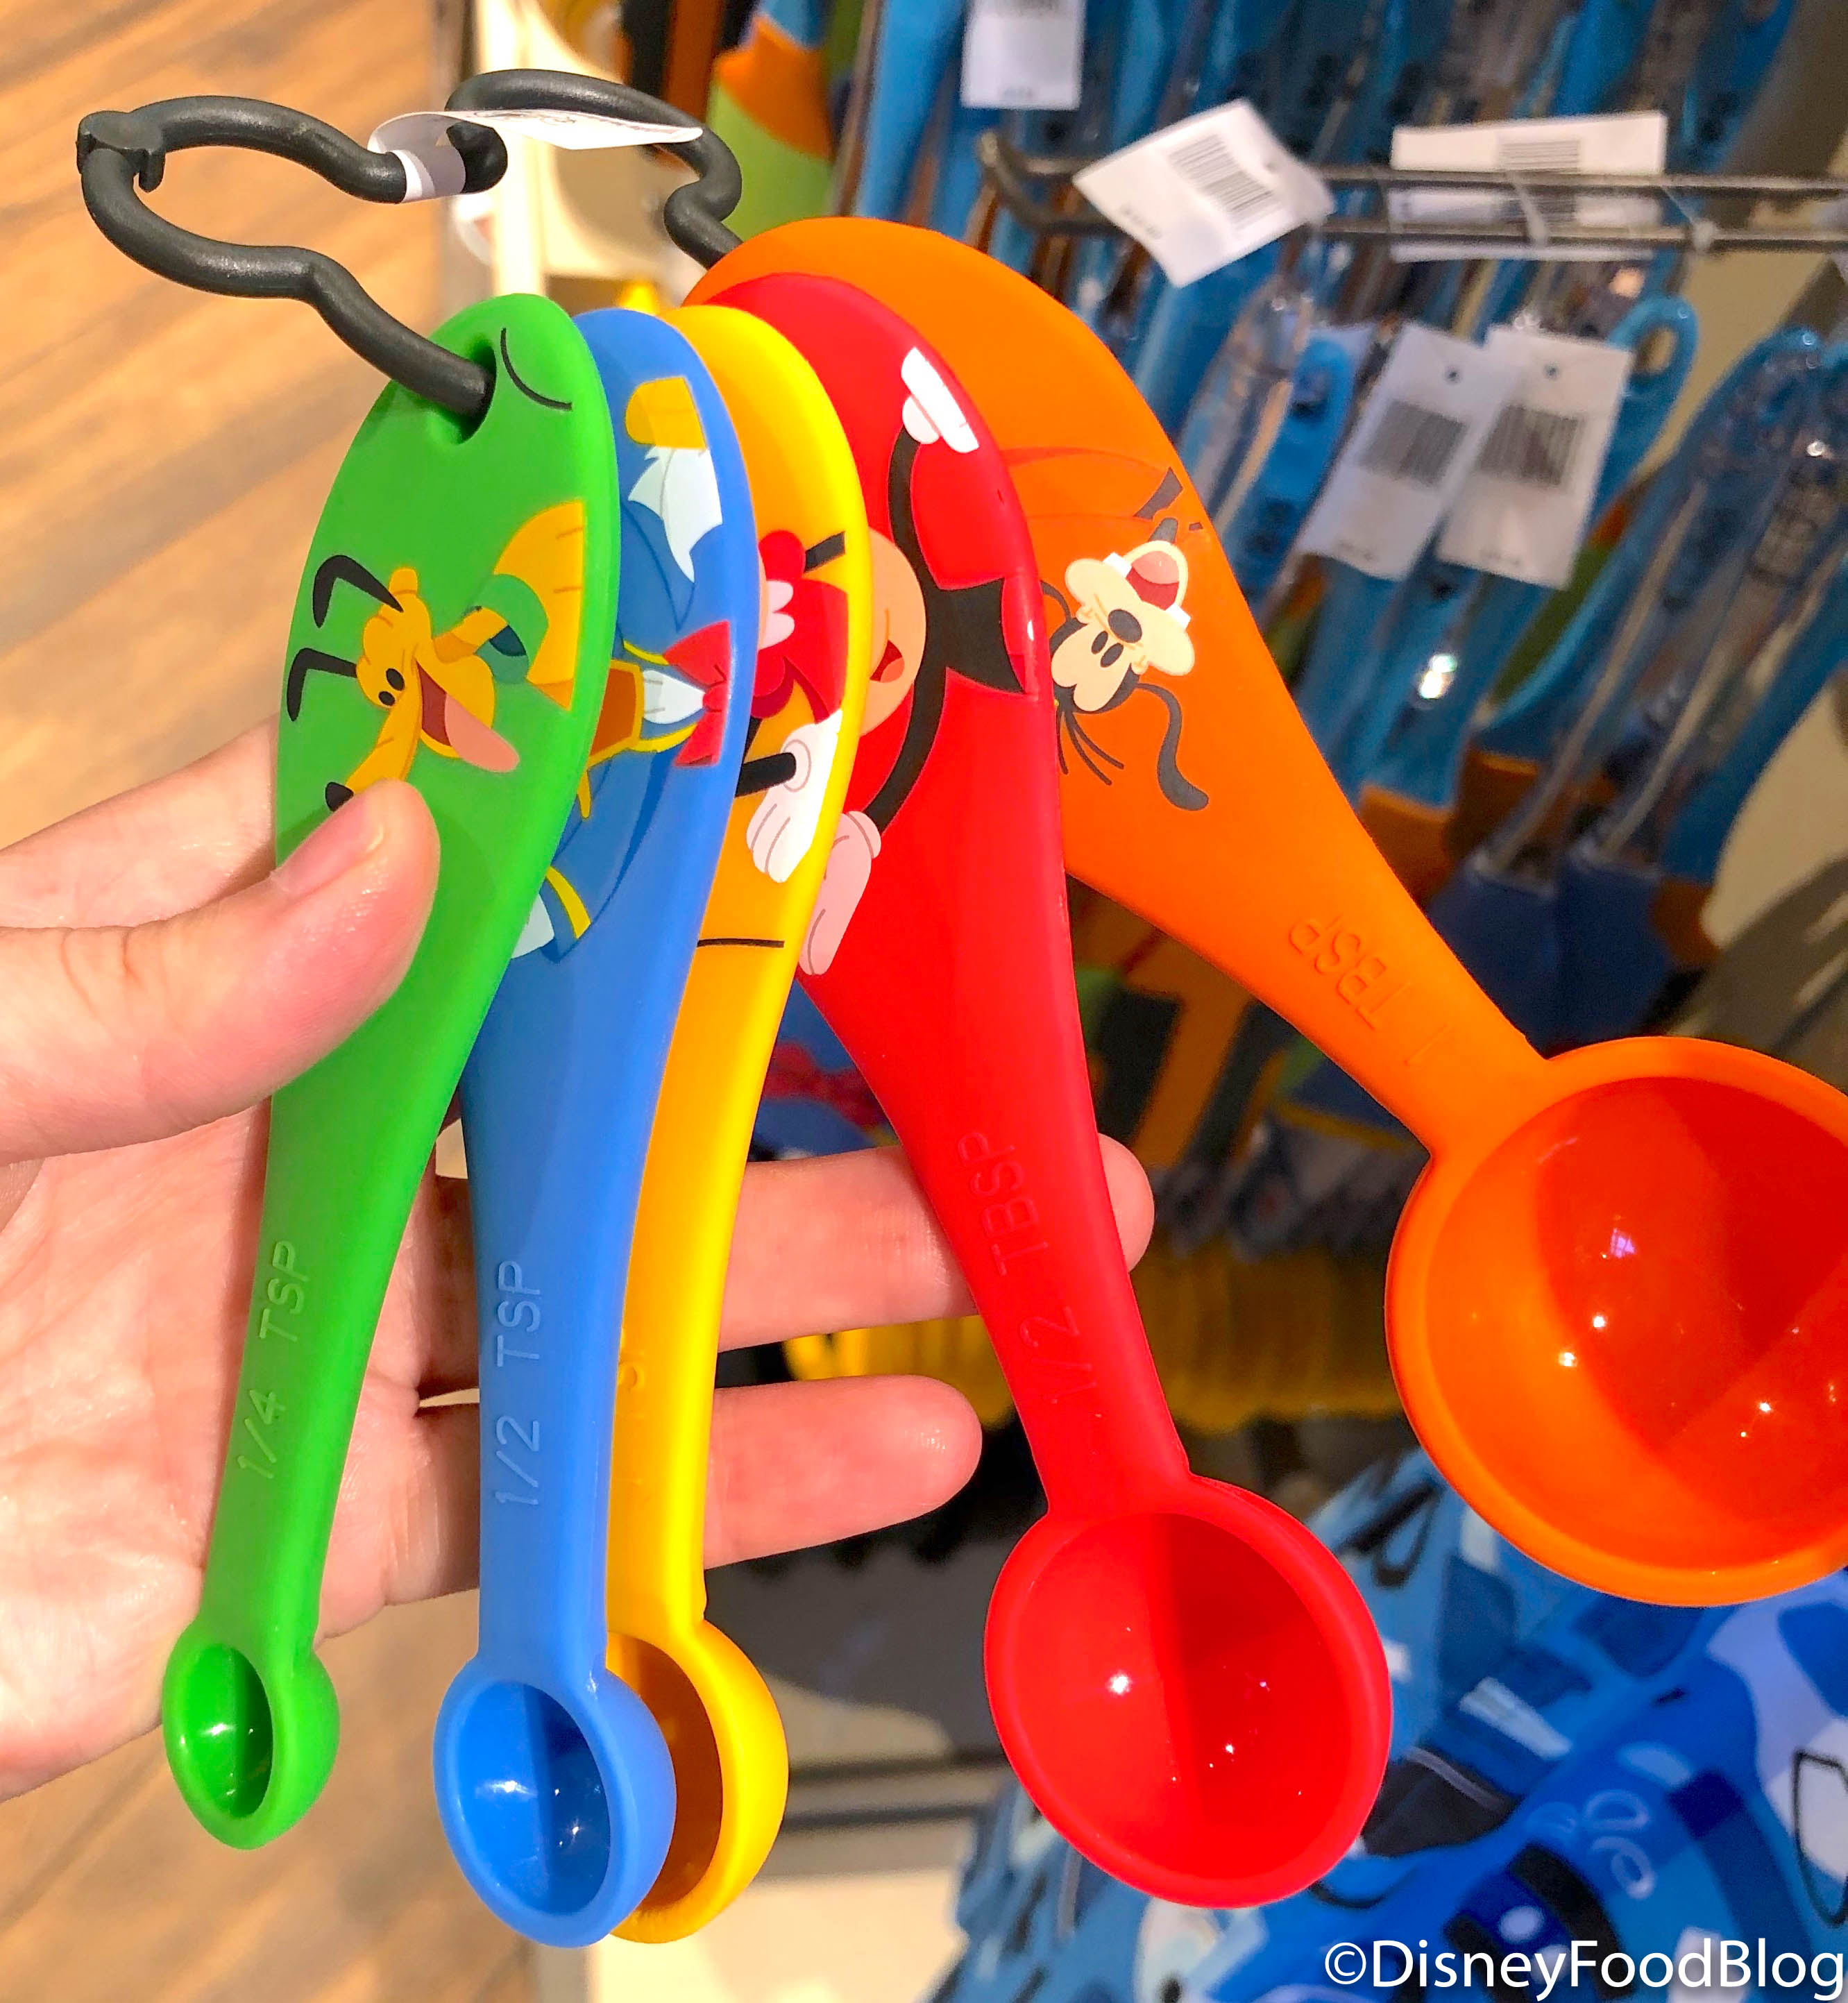 Disney Plastic Measuring Spoons